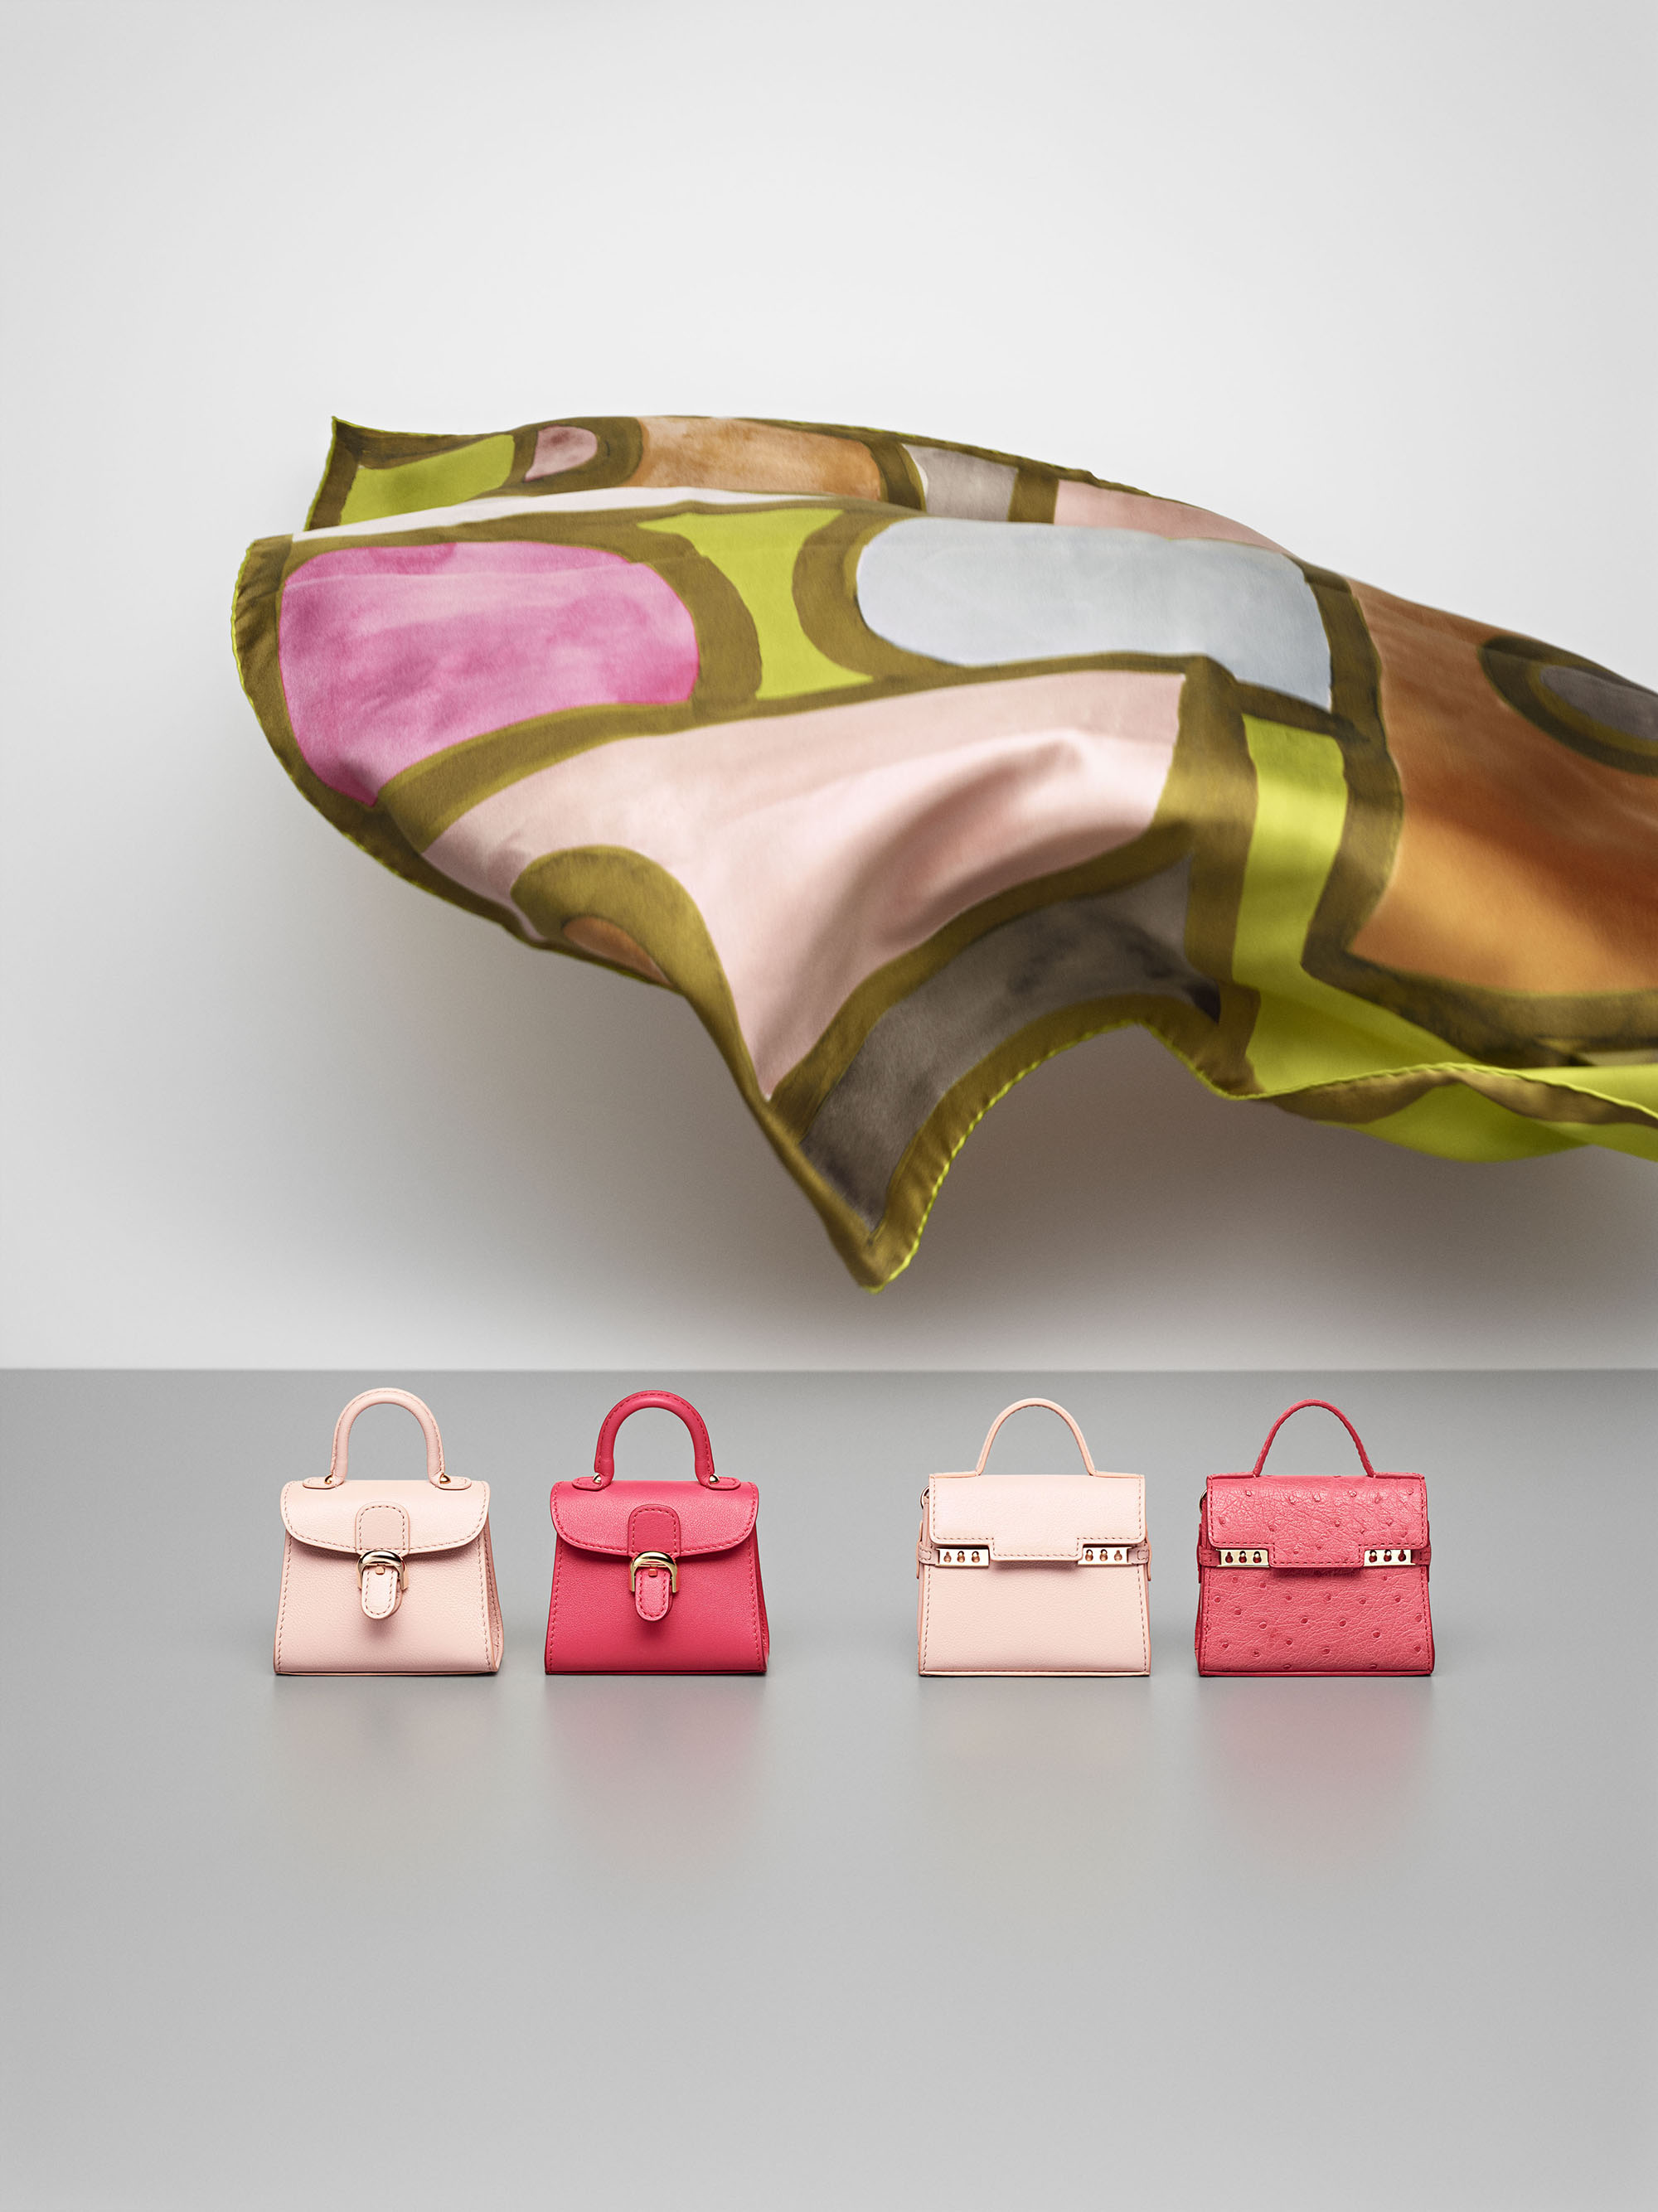 New bag alert: the Delvaux brilliant #delvaux #fyp #fashiontok #handba